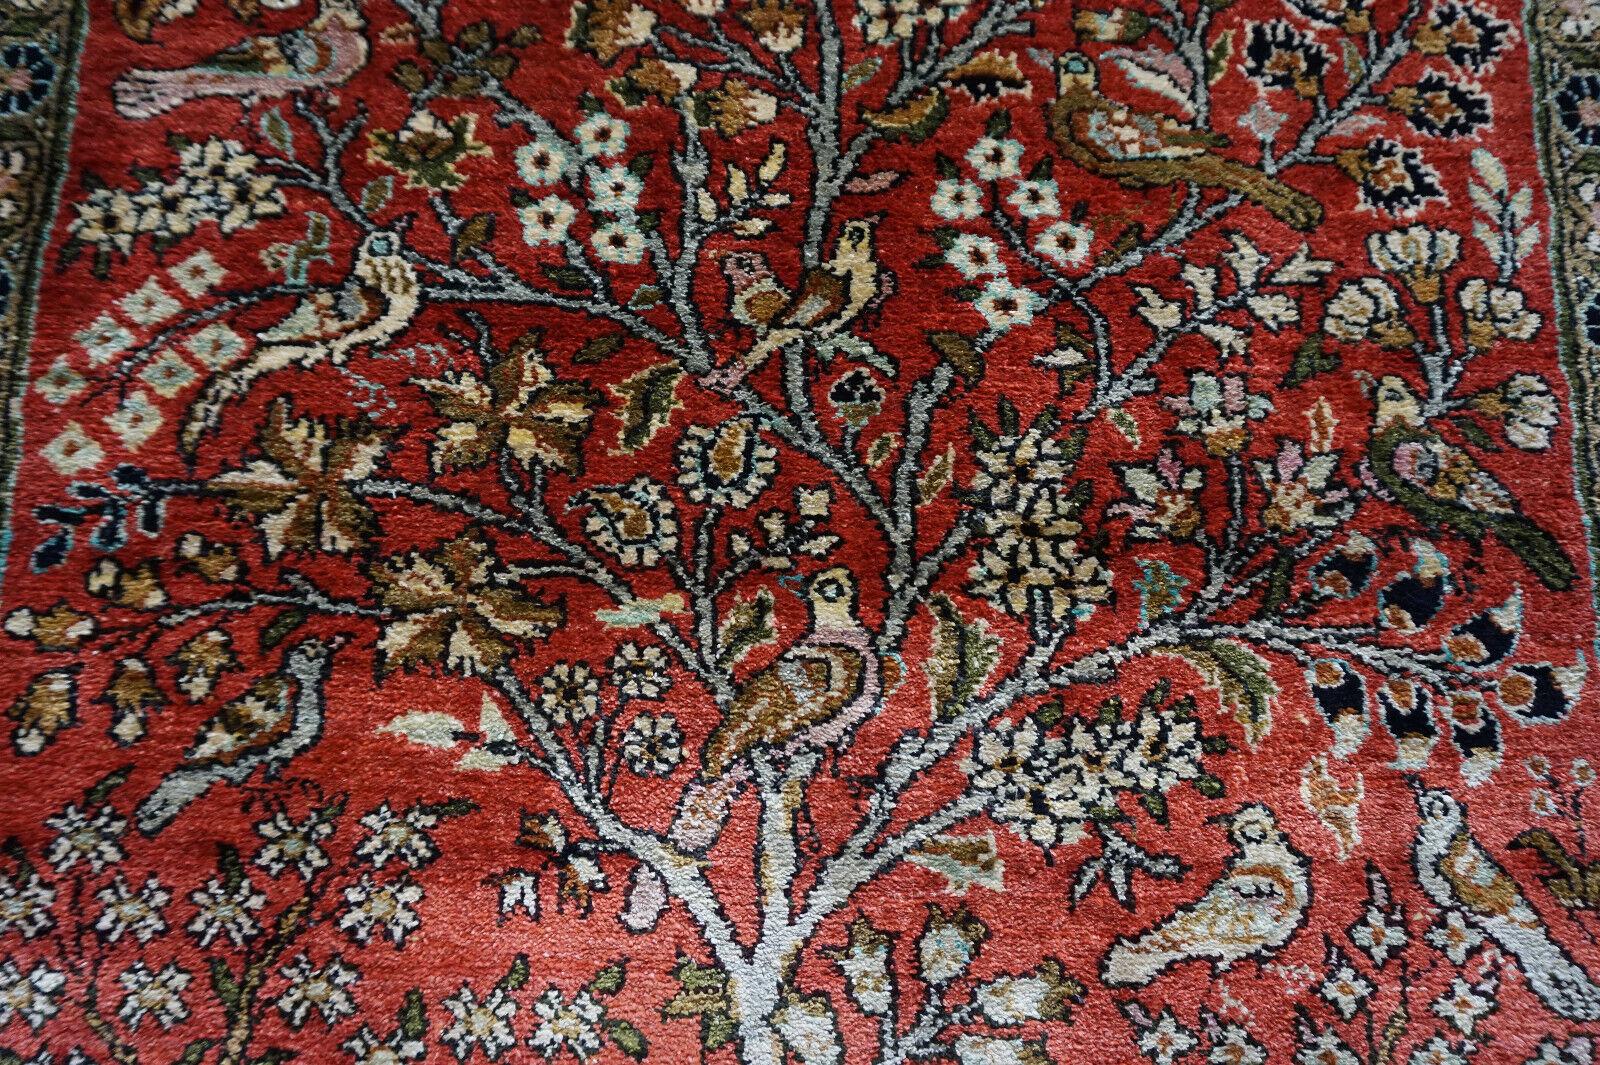 Handmade Vintage Persian Style Qum Silk Rug 1.9' x 2.5', 1970s - 1D64 For Sale 3